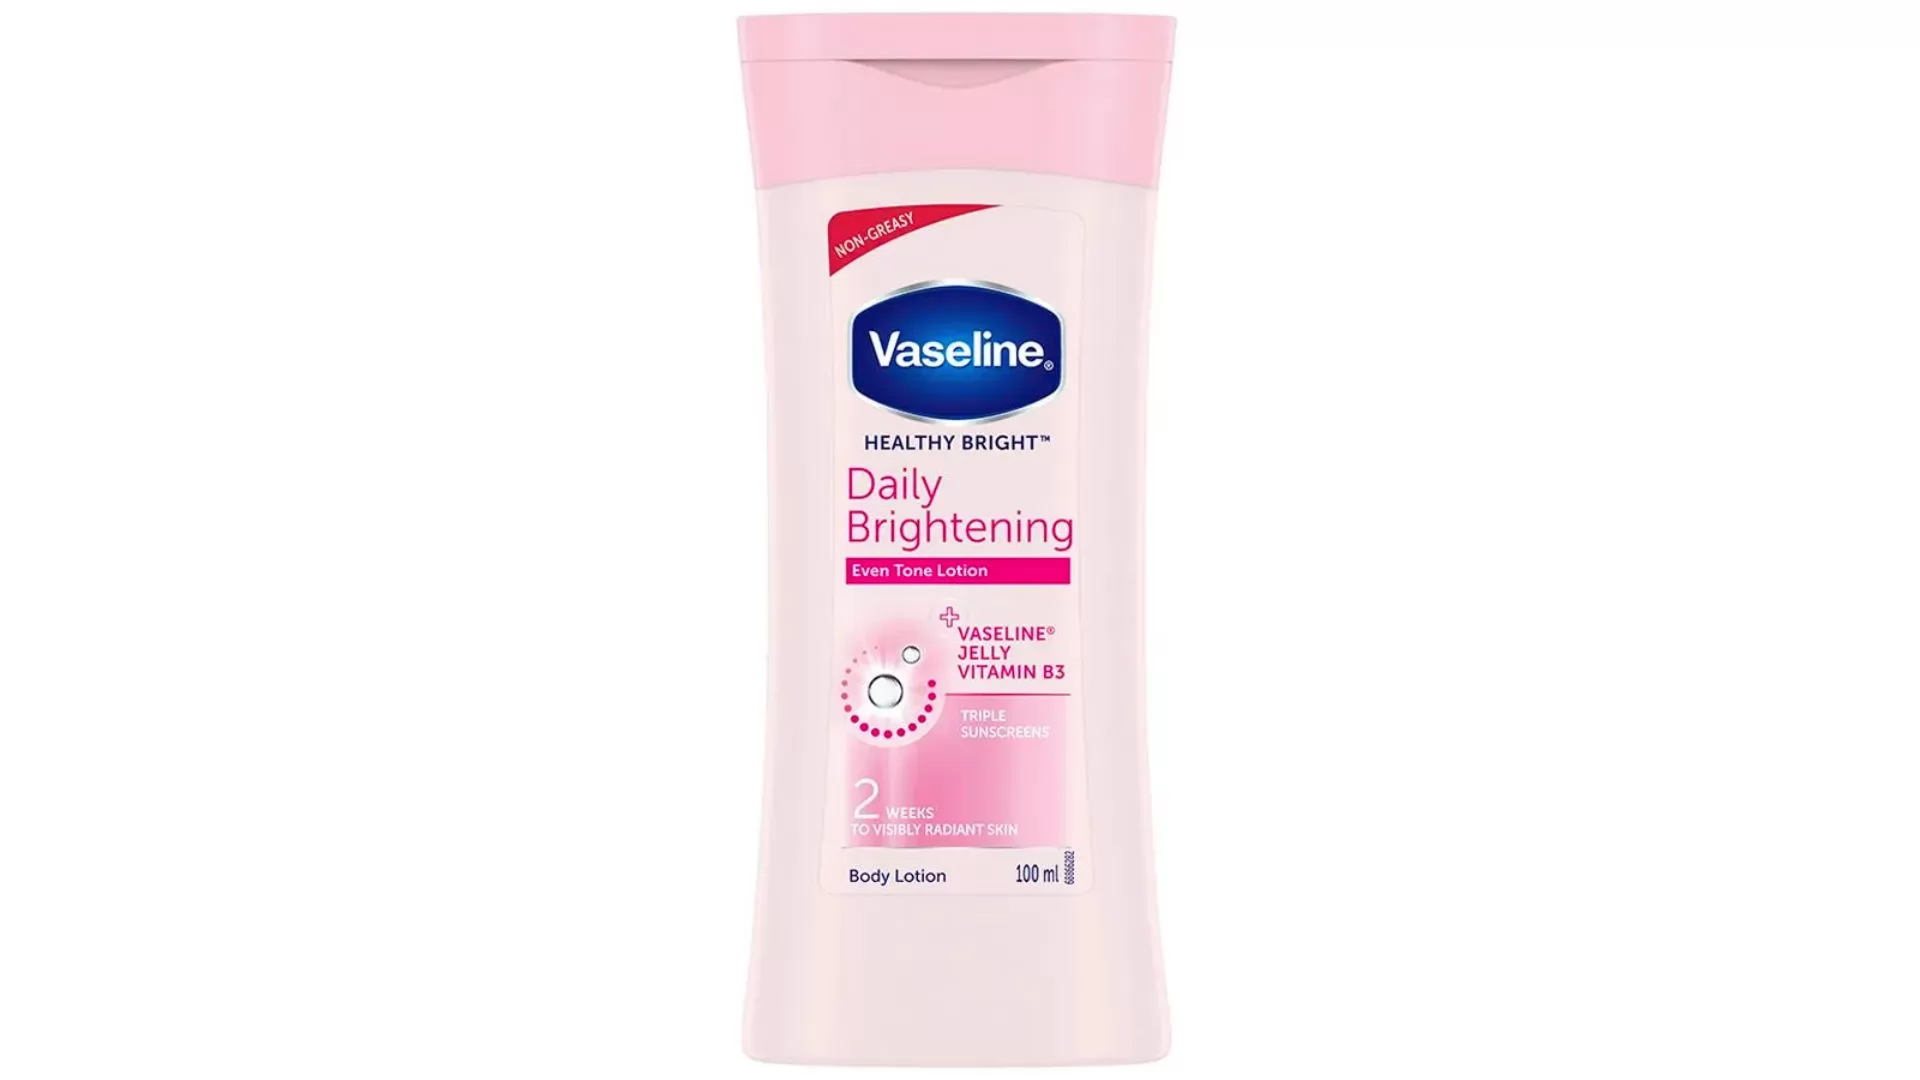 Vaseline - Healthy Bright Daily Brightening body lotion 